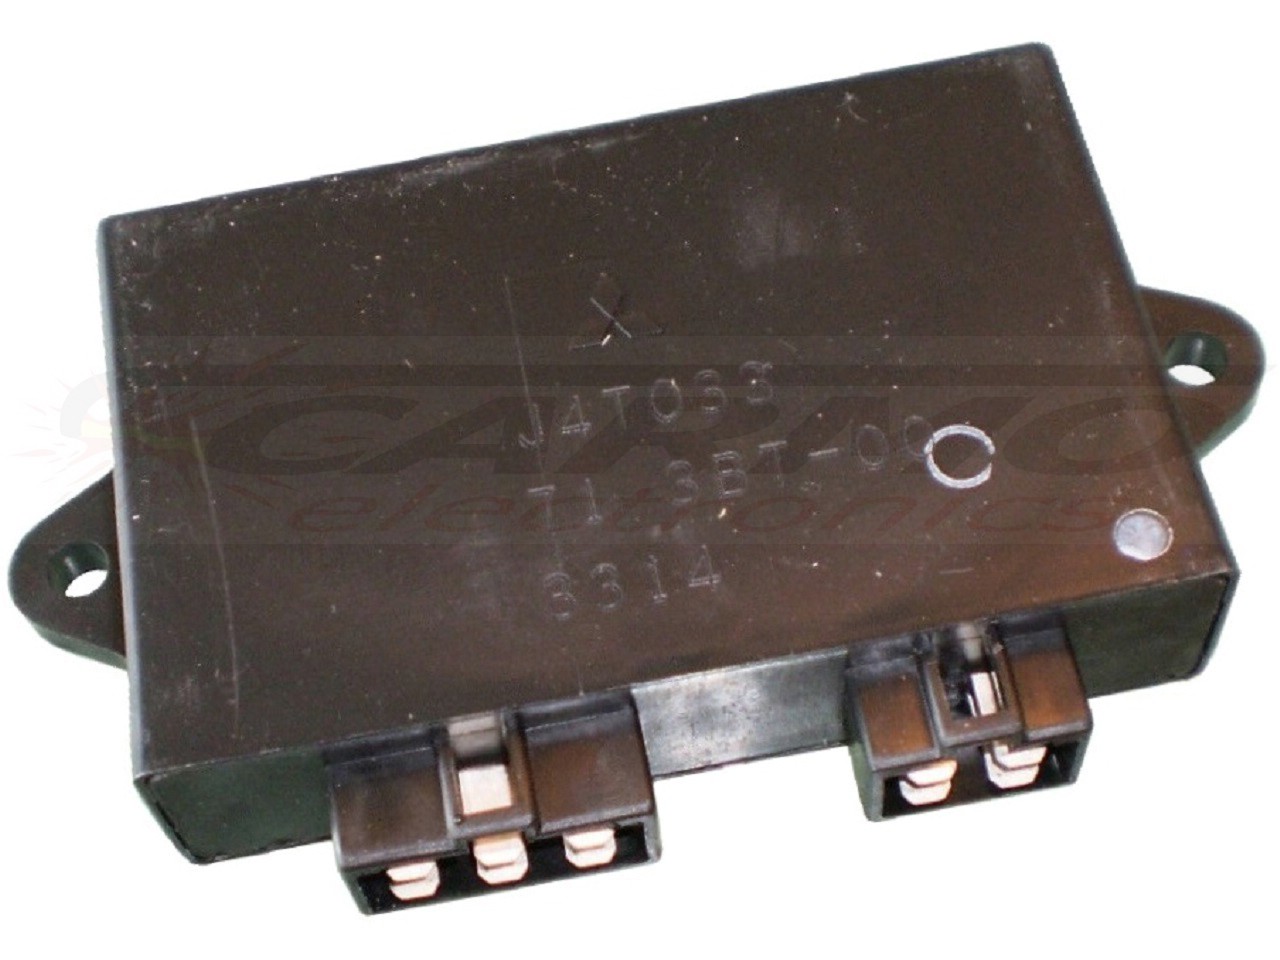 XV535 Virago igniter ignition module TCI CDI Box (J4T033, 71 3BT-00, 3BT-82305-00-00)